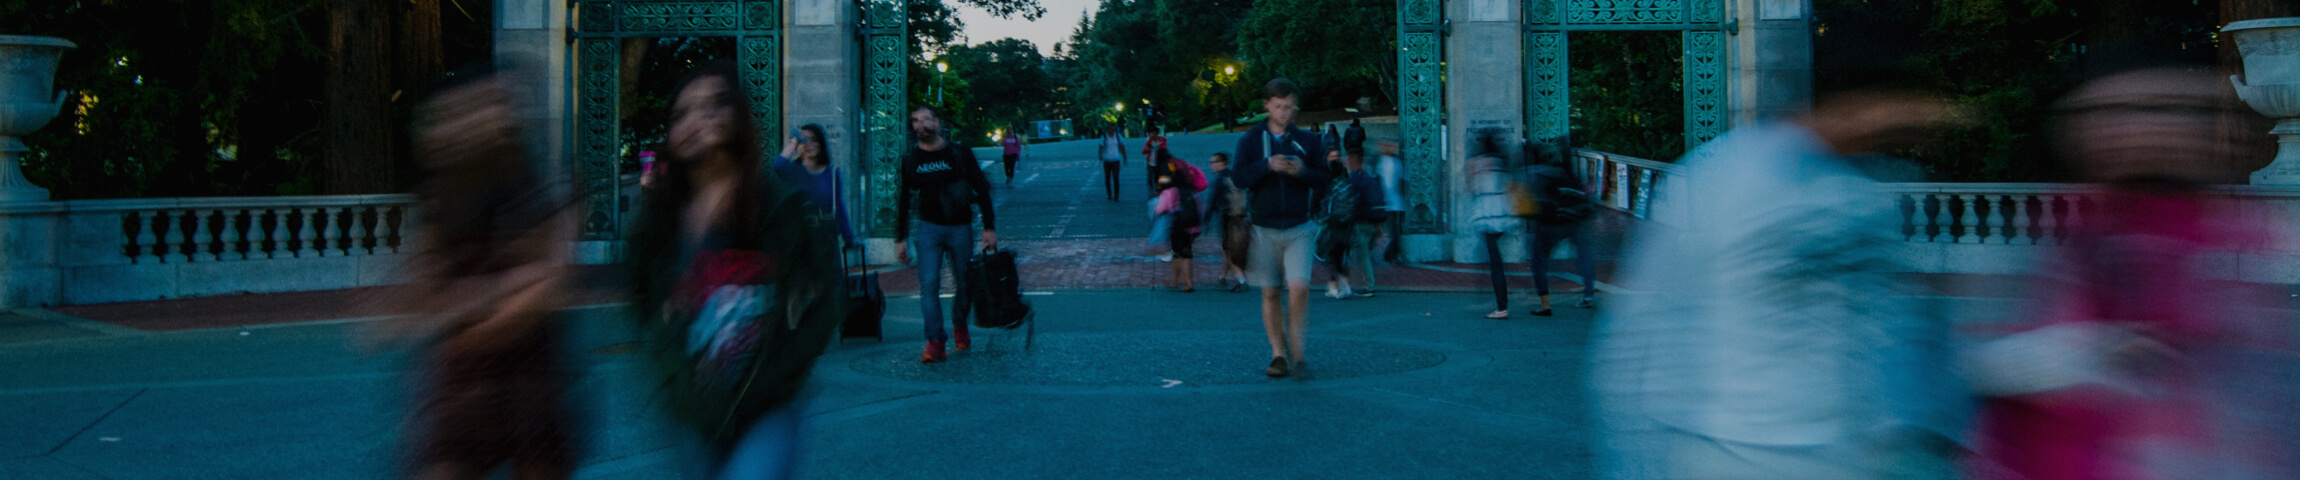 UC Berkeley students walking under Sather Gate